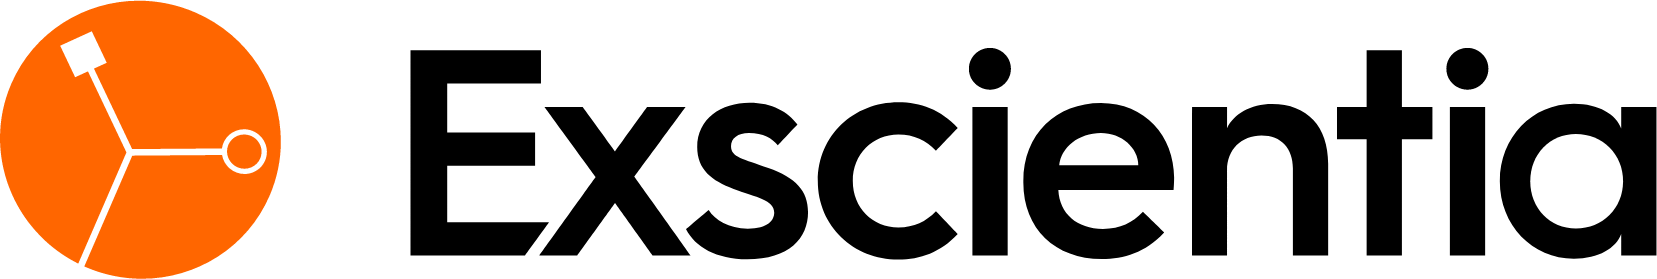 Exscientia logo large (transparent PNG)